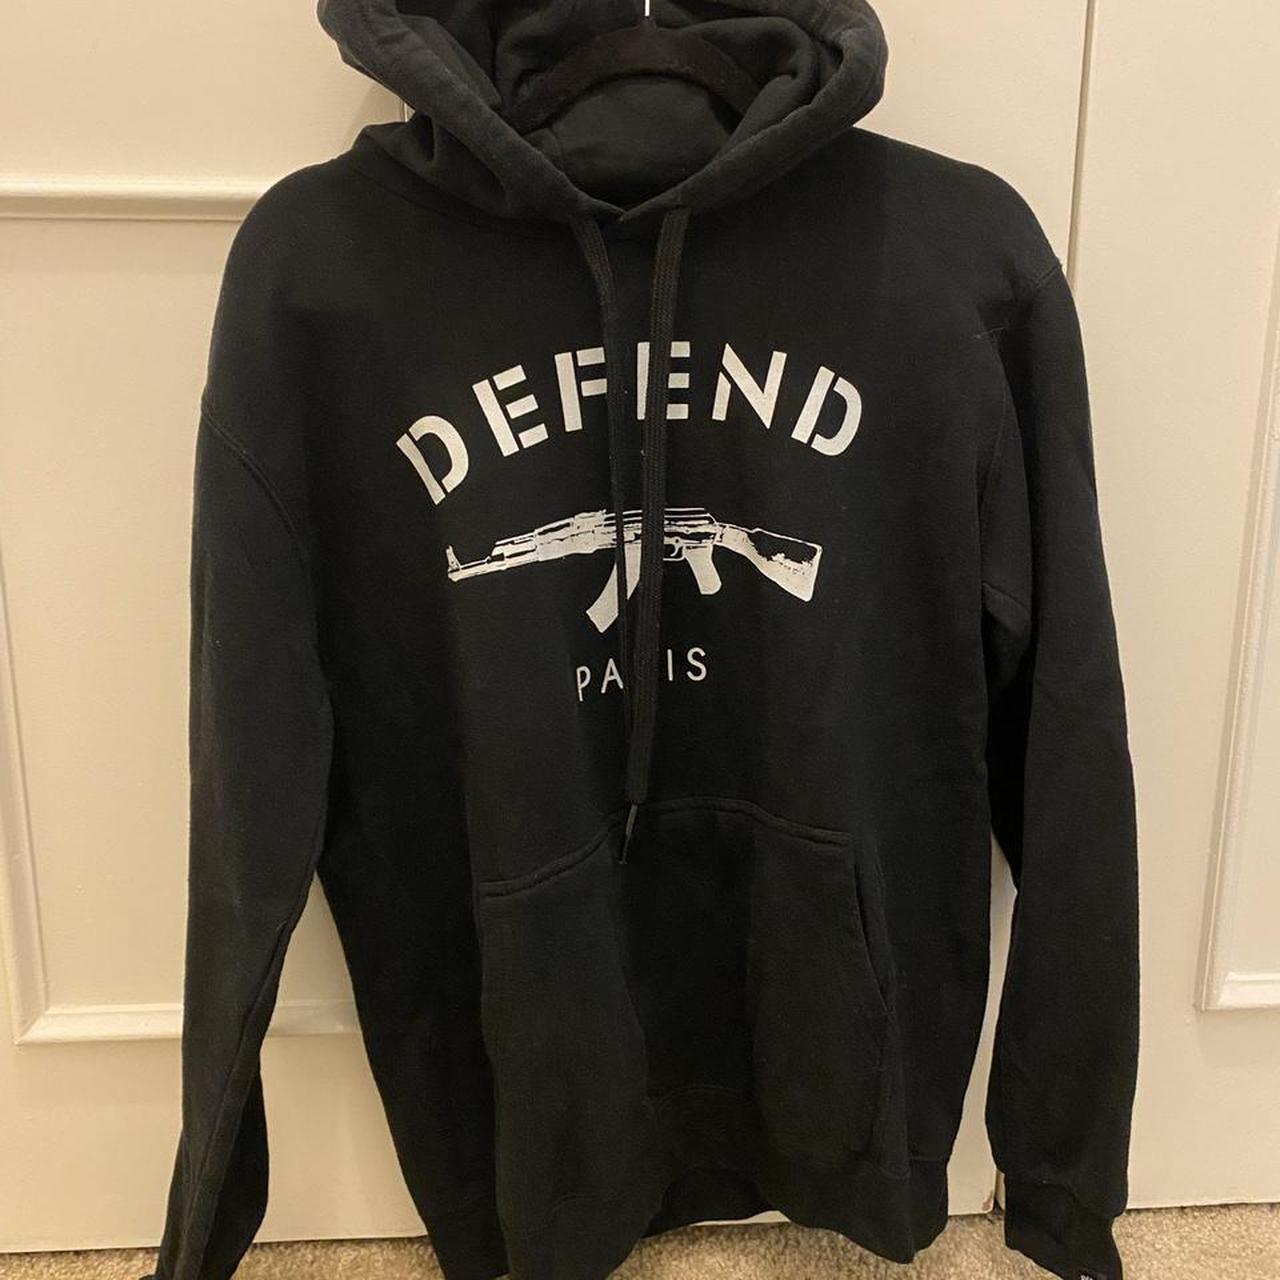 defend paris hoodie size medium - Depop